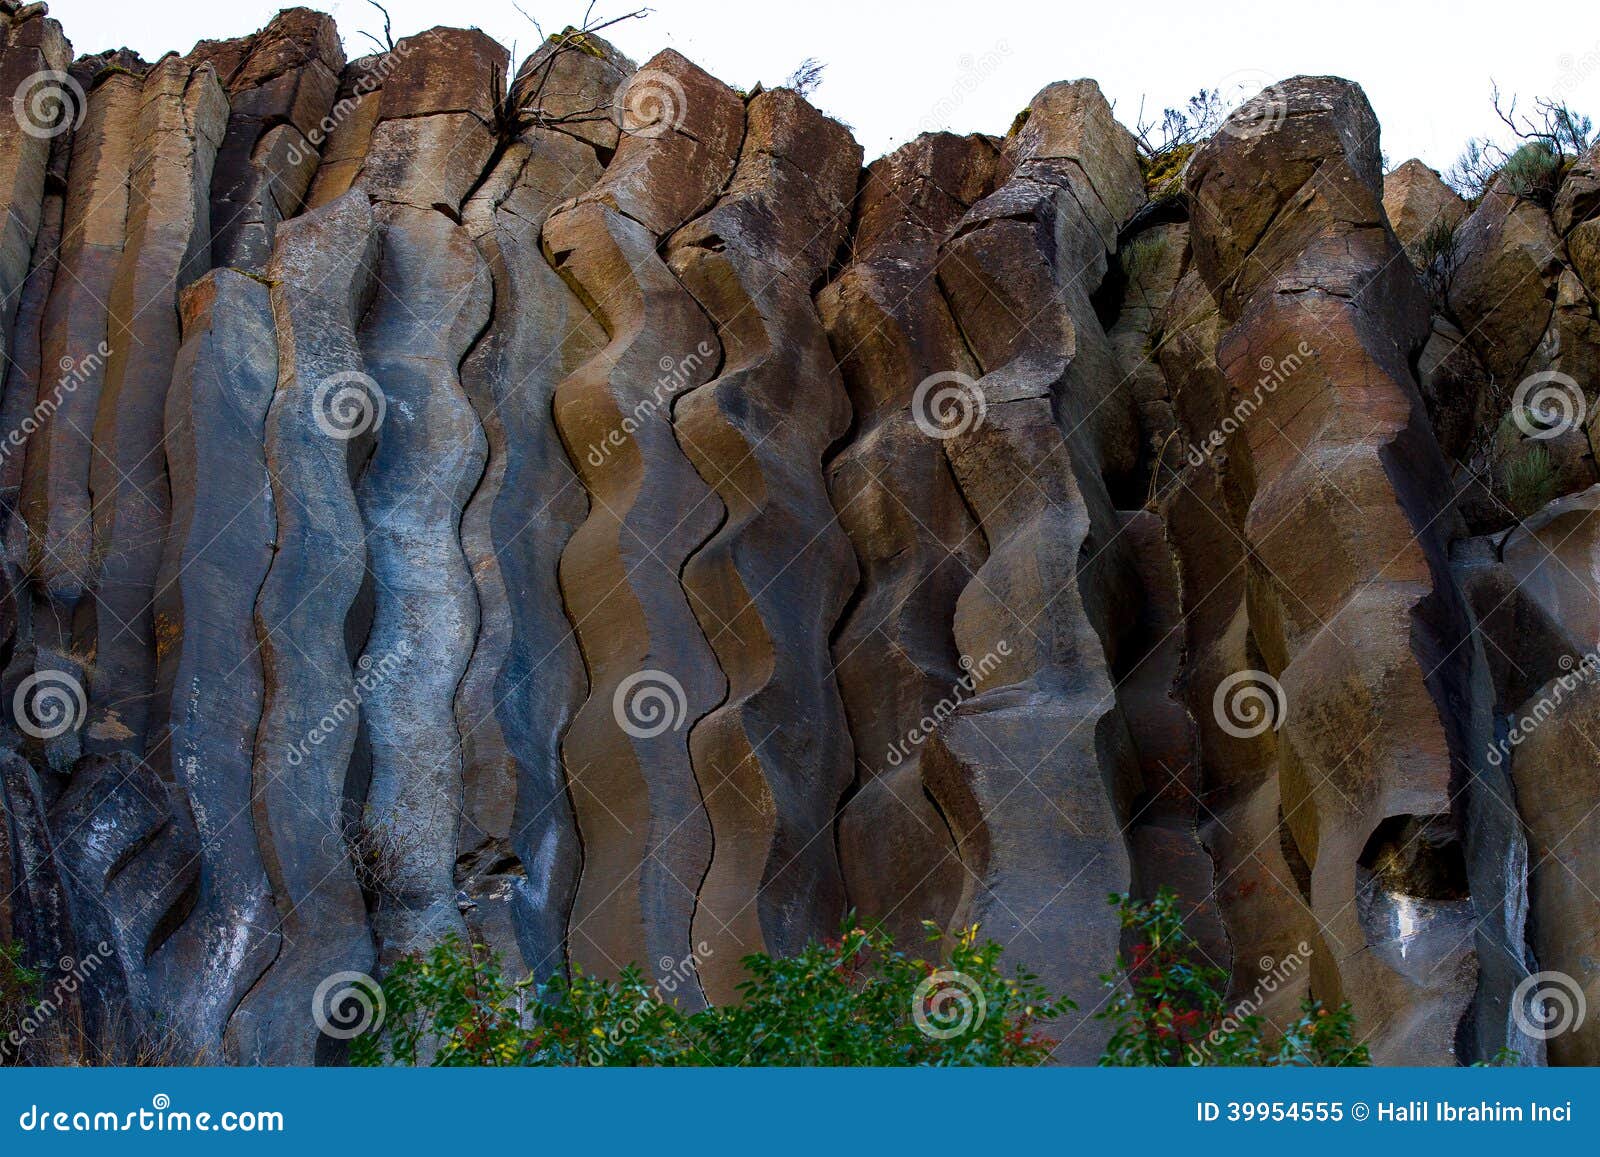 basalt columns curvy detail